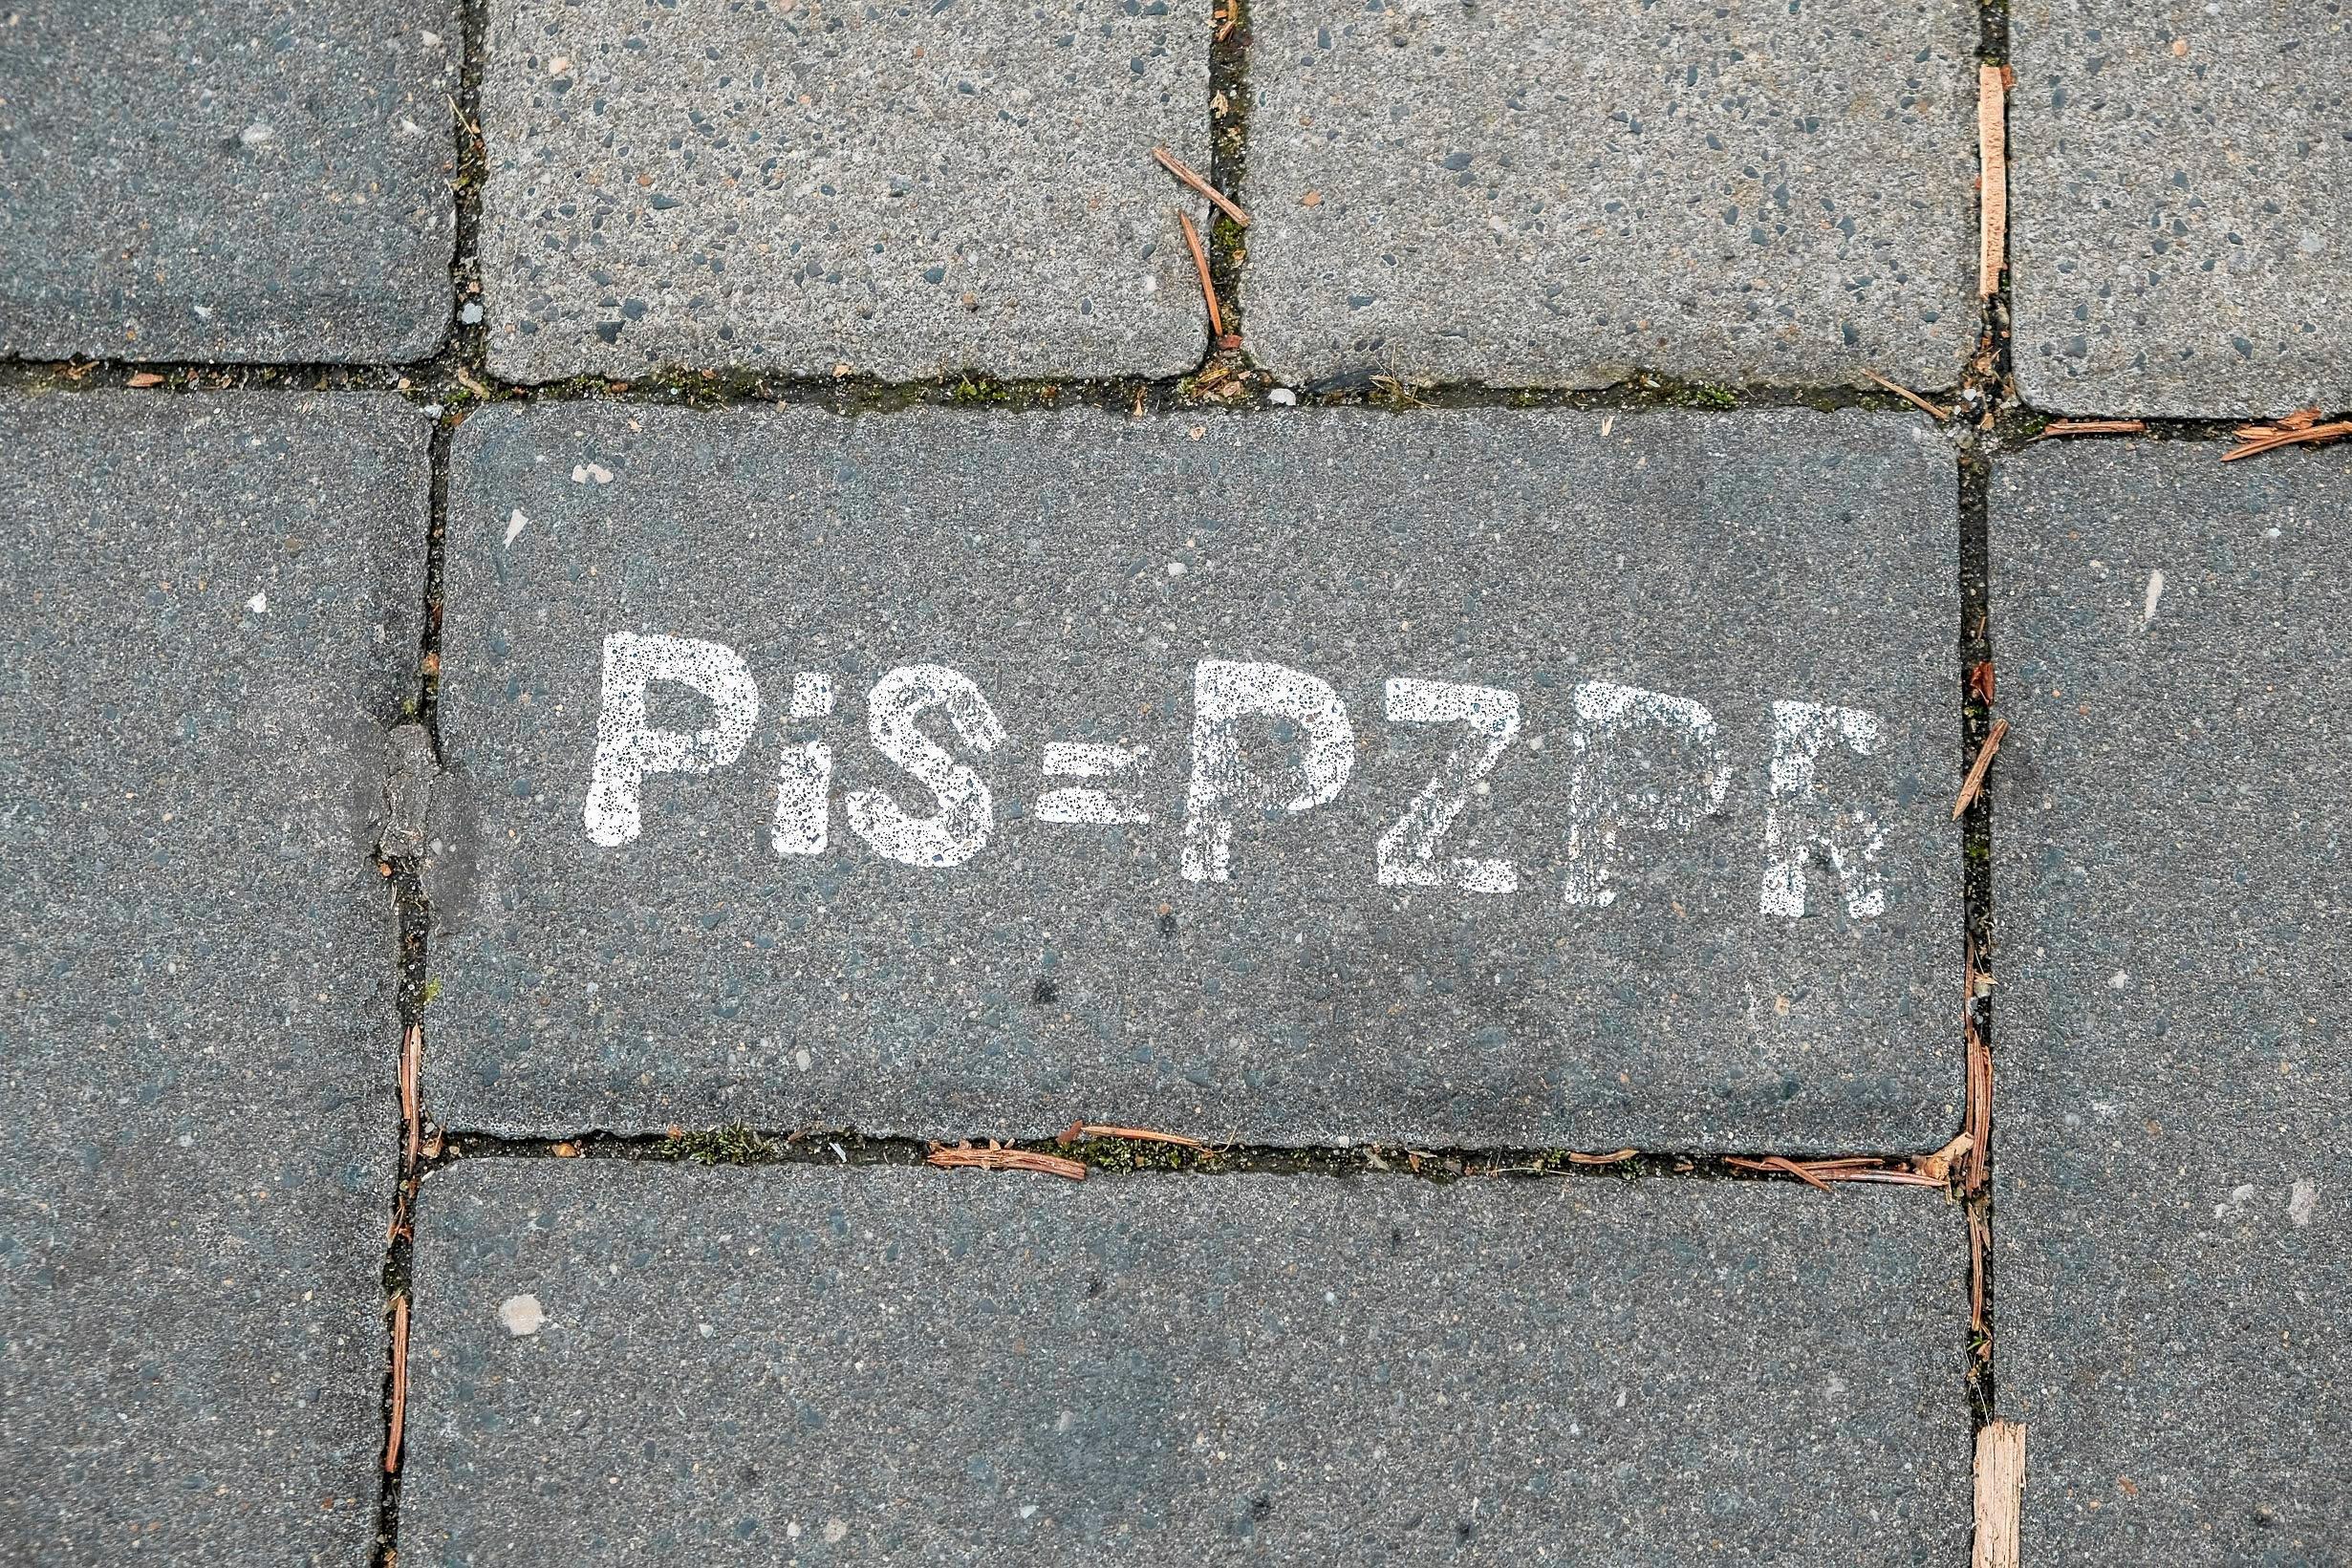 Napis na chodniku "PiS=PZPR"